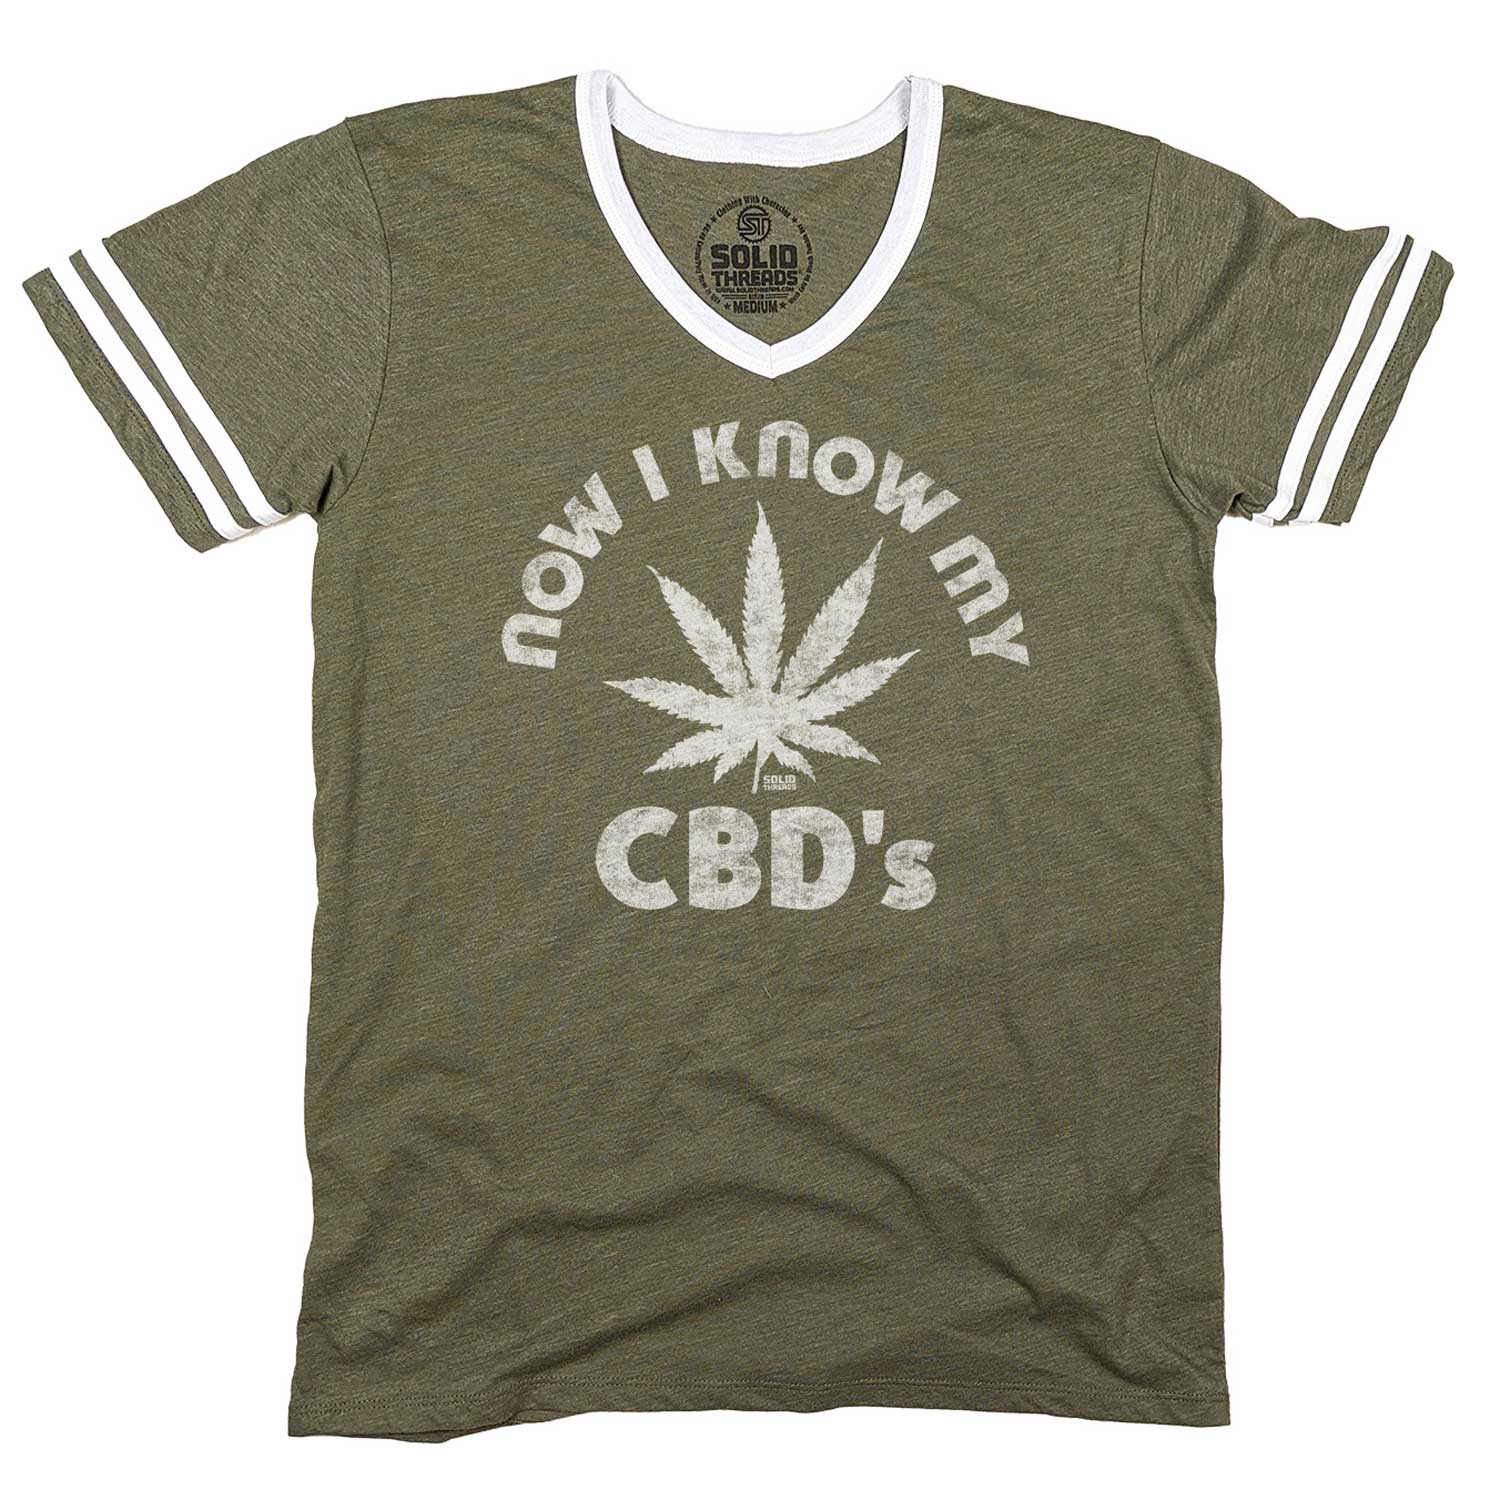 Men's Now I Know My CBD's Vintage Graphic V-Neck Tee | Retro Marijuana T-shirt | Solid Threads